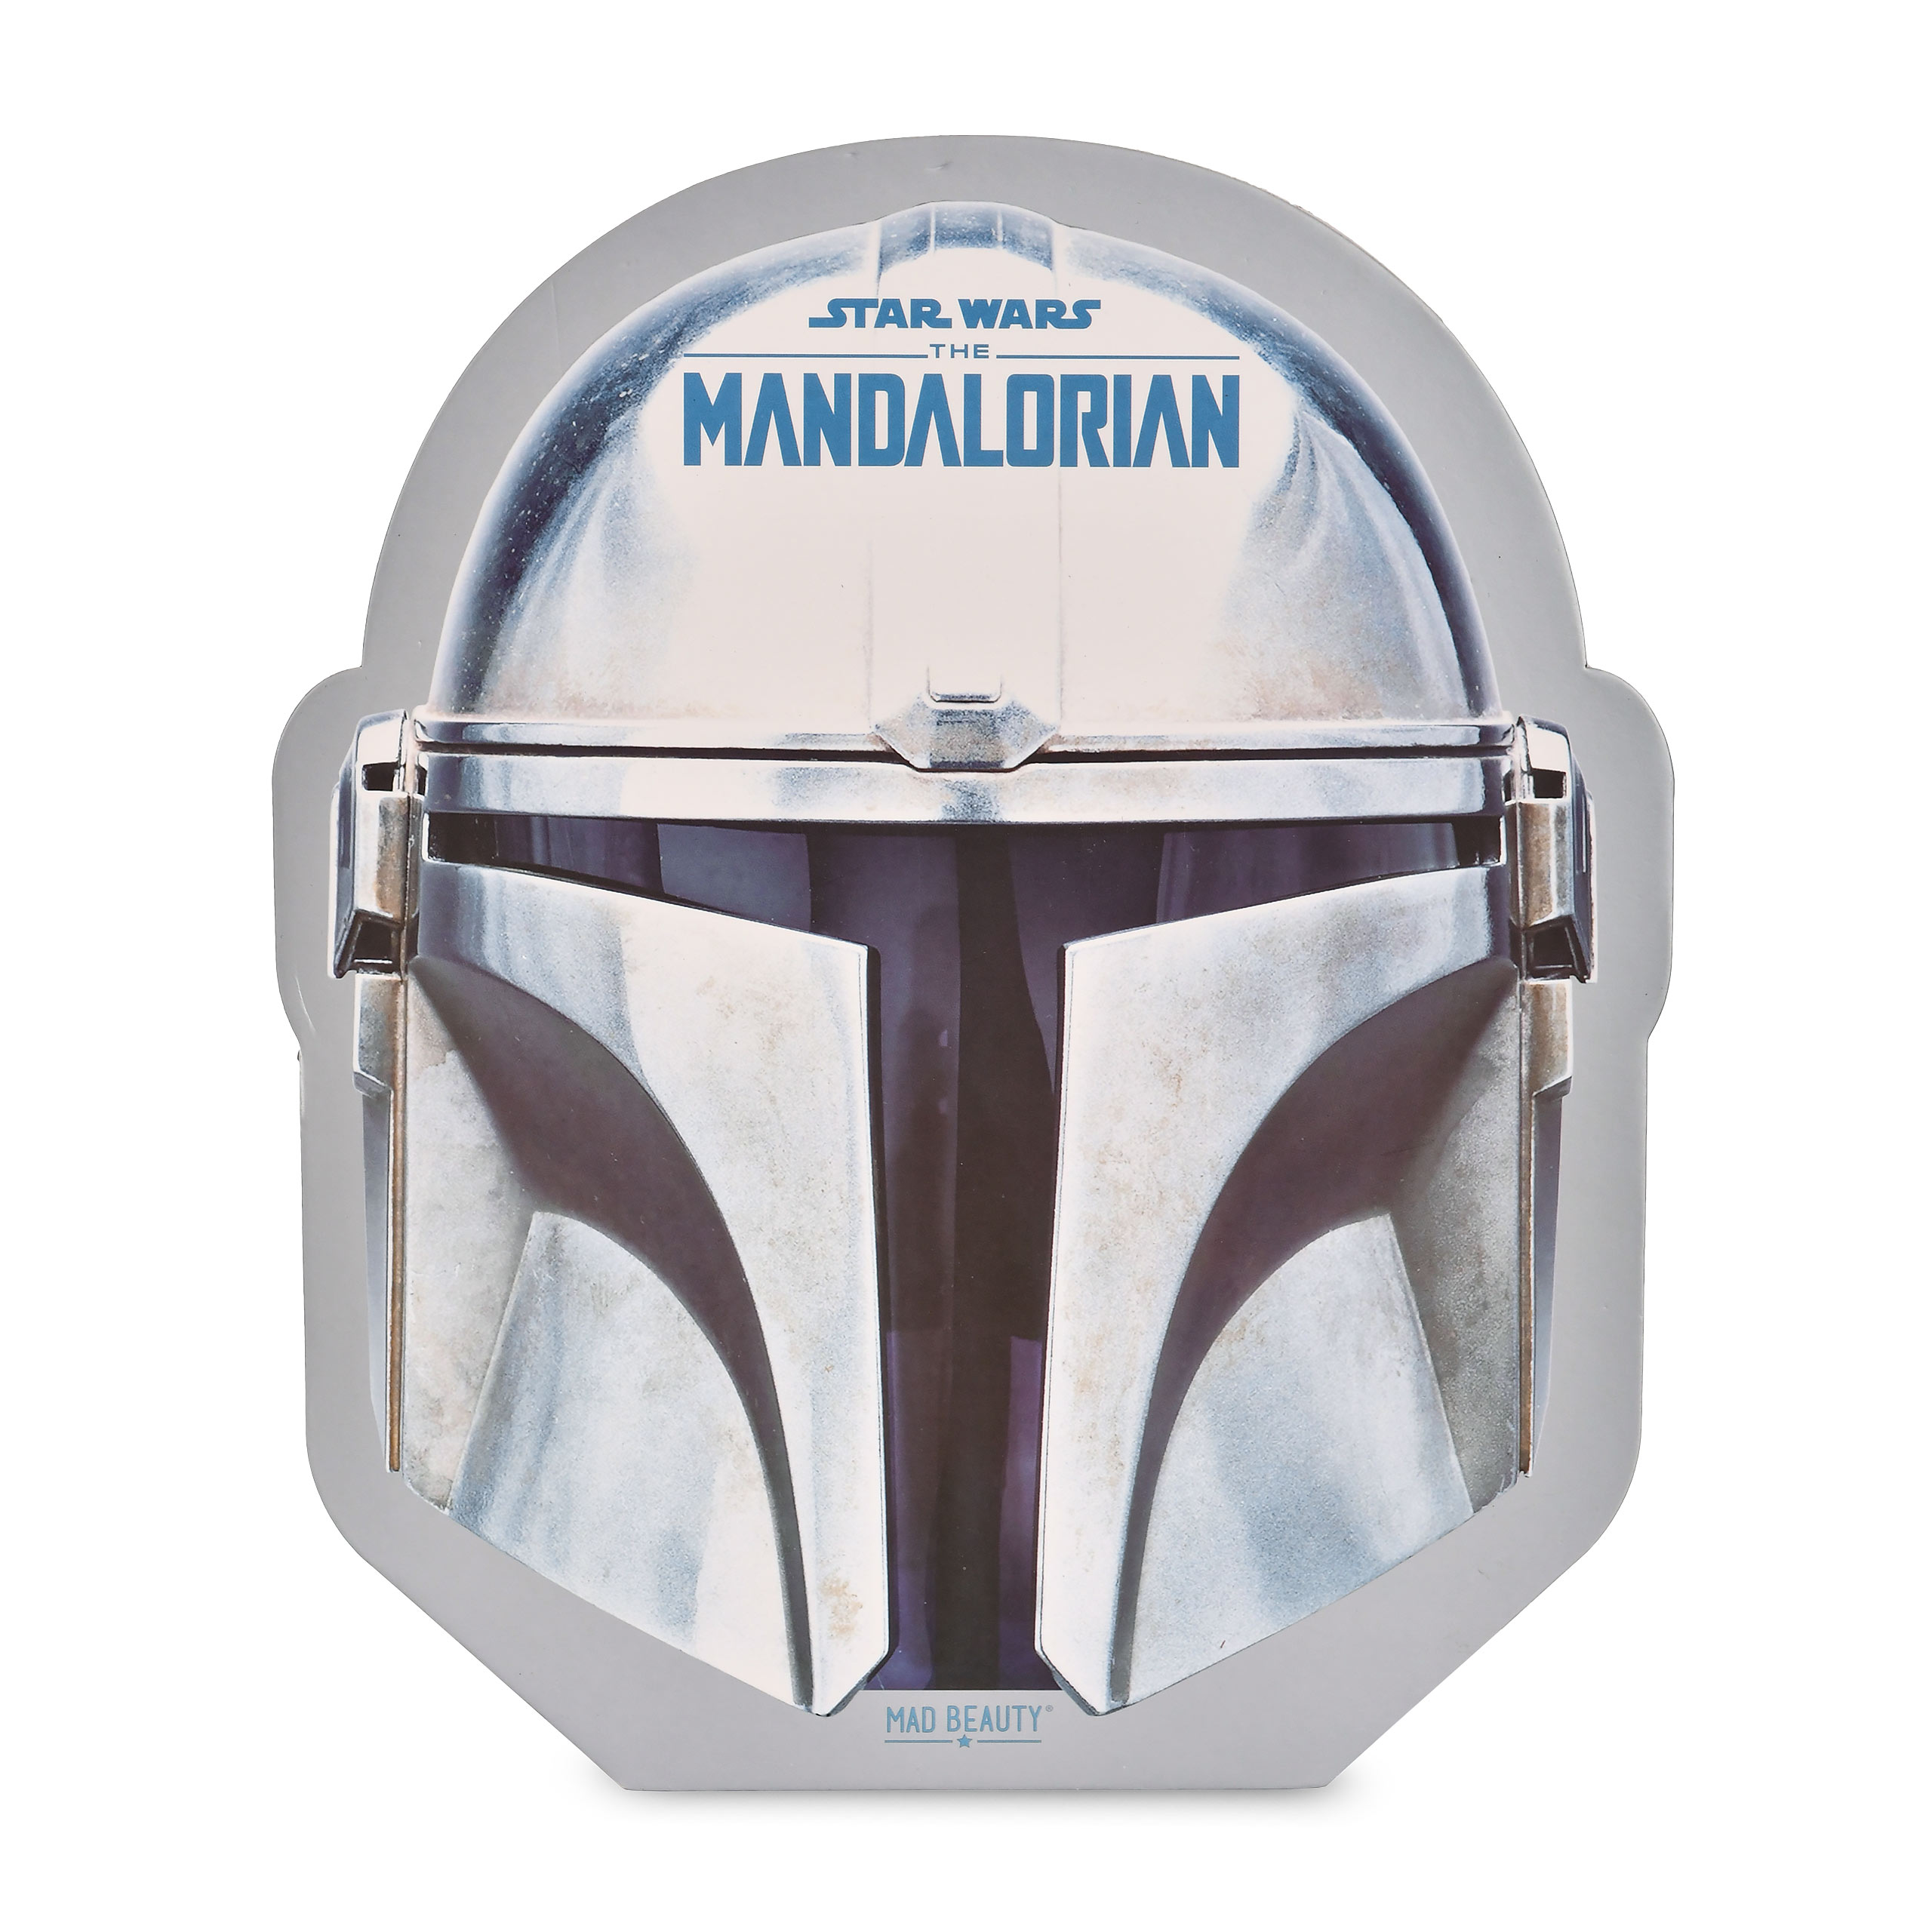 Star Wars The Mandalorian - Bath Set